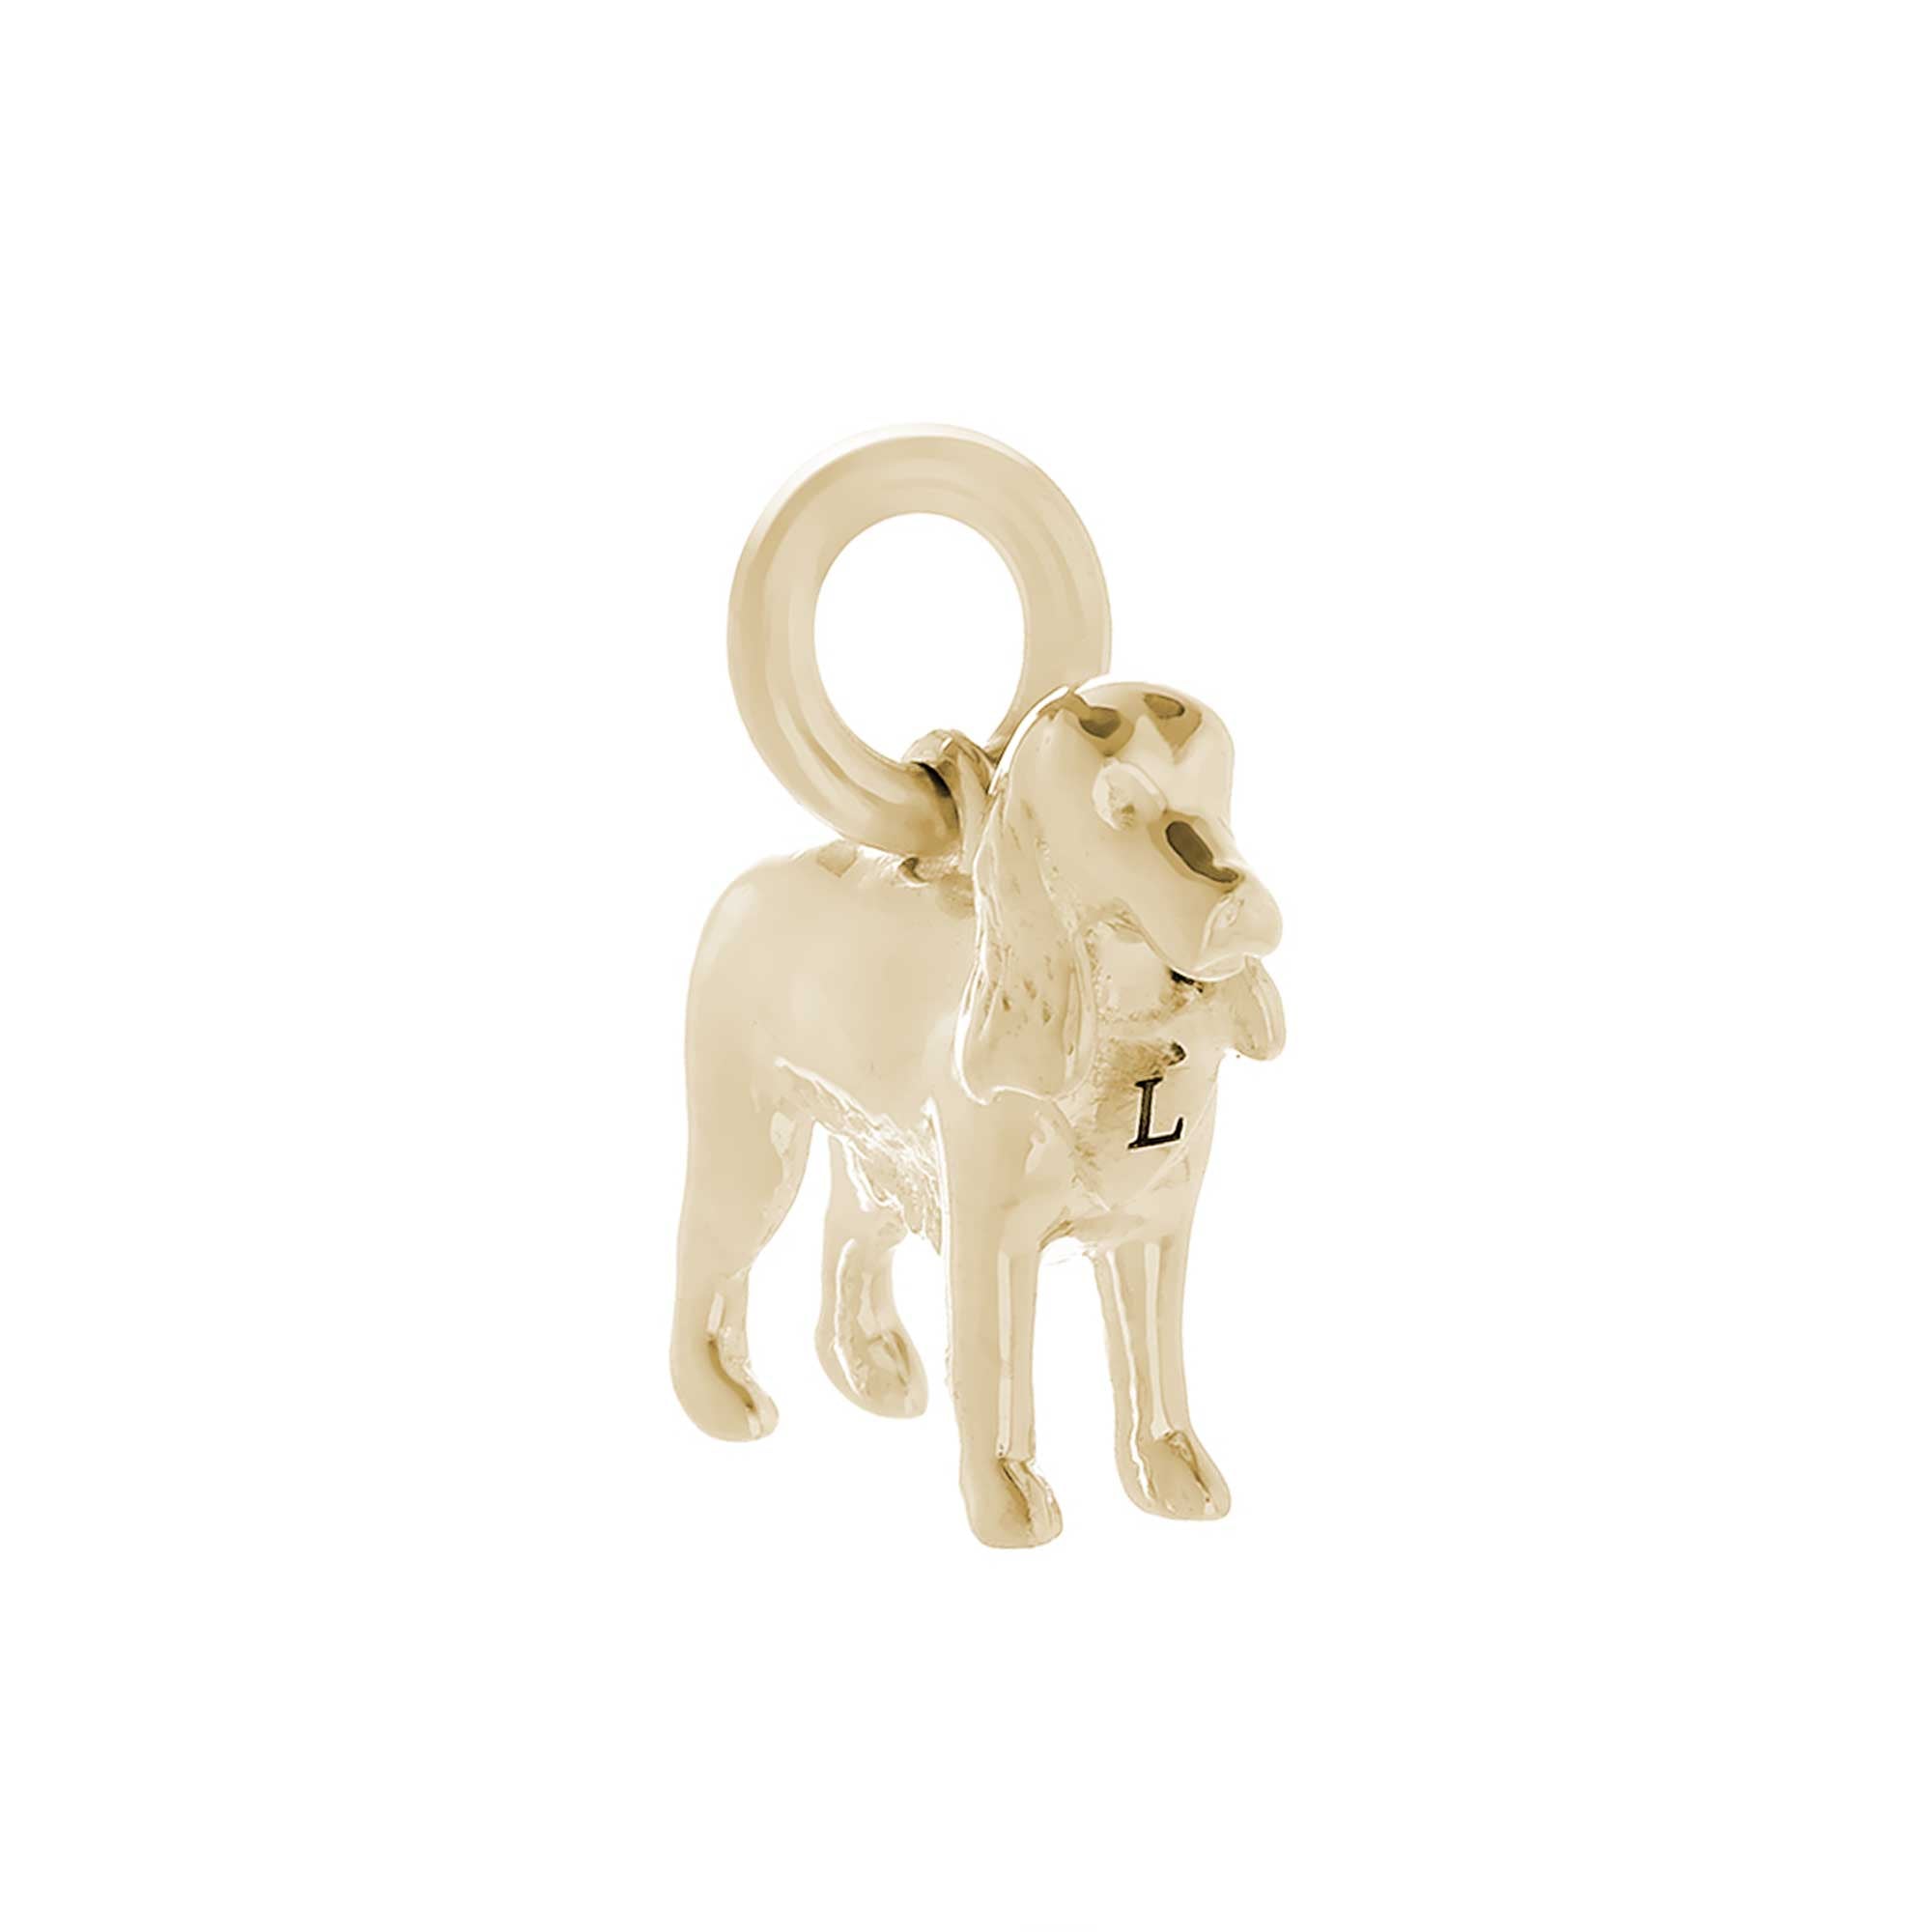 solid gold english cocker spaniel dog charm 9k 9ct for bracelet